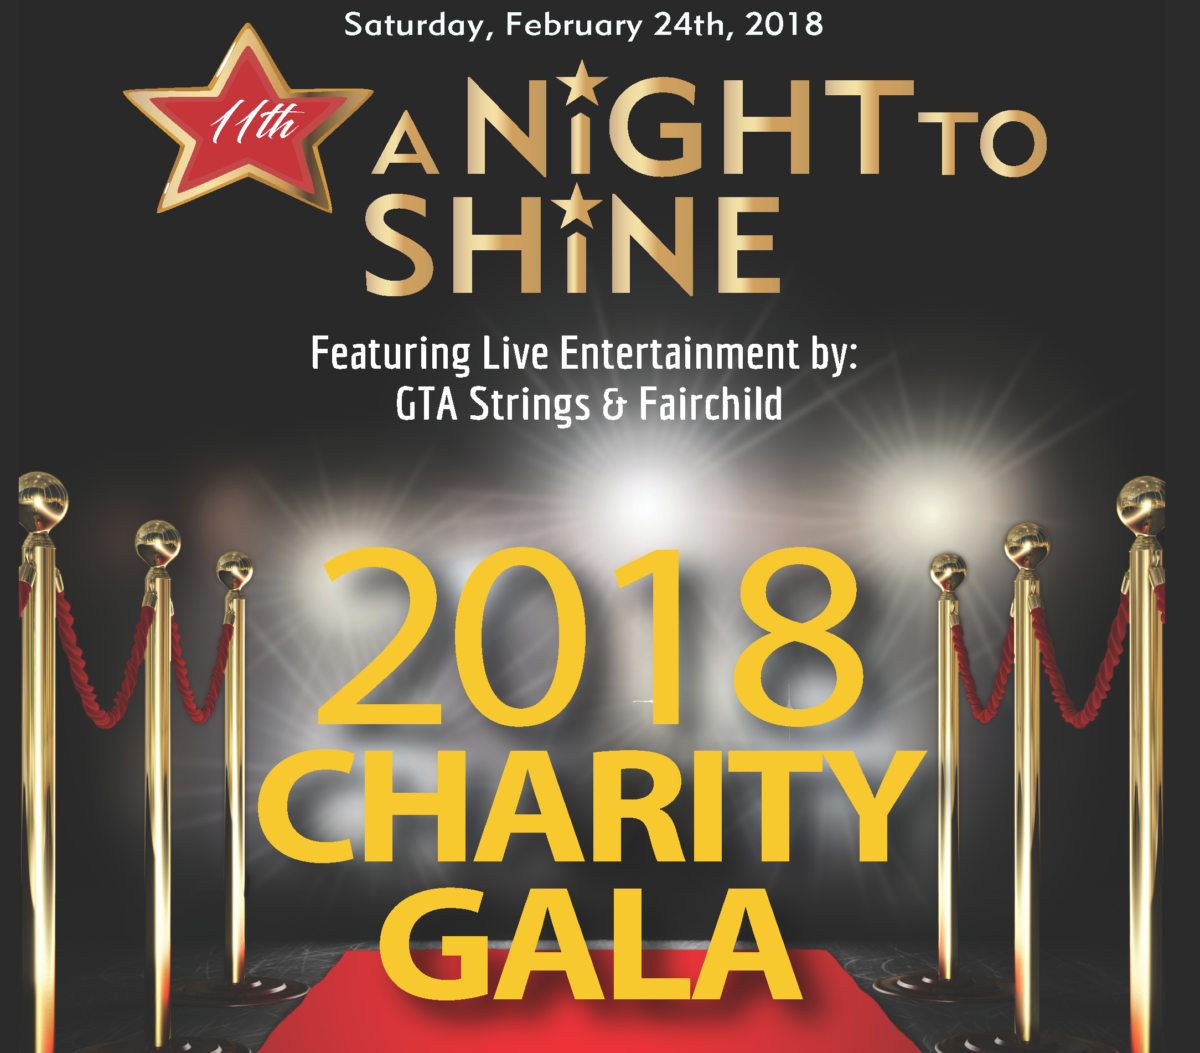 SEC 2018 Annual Charity Gala